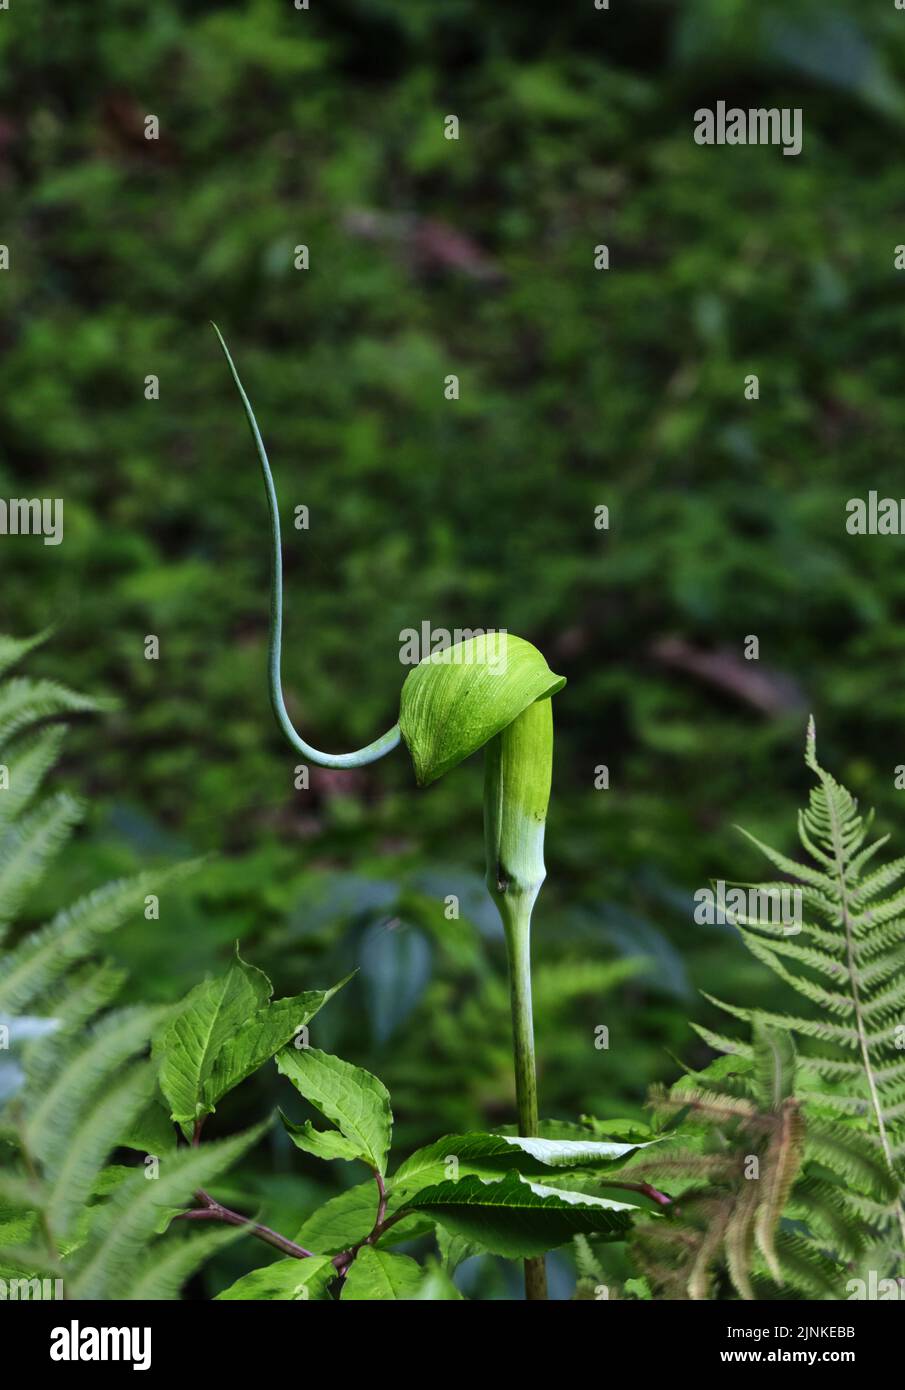 Pianta di Arisaema tortuosum su fondo verde. Giglio di cobra di whipcord. Foto Stock